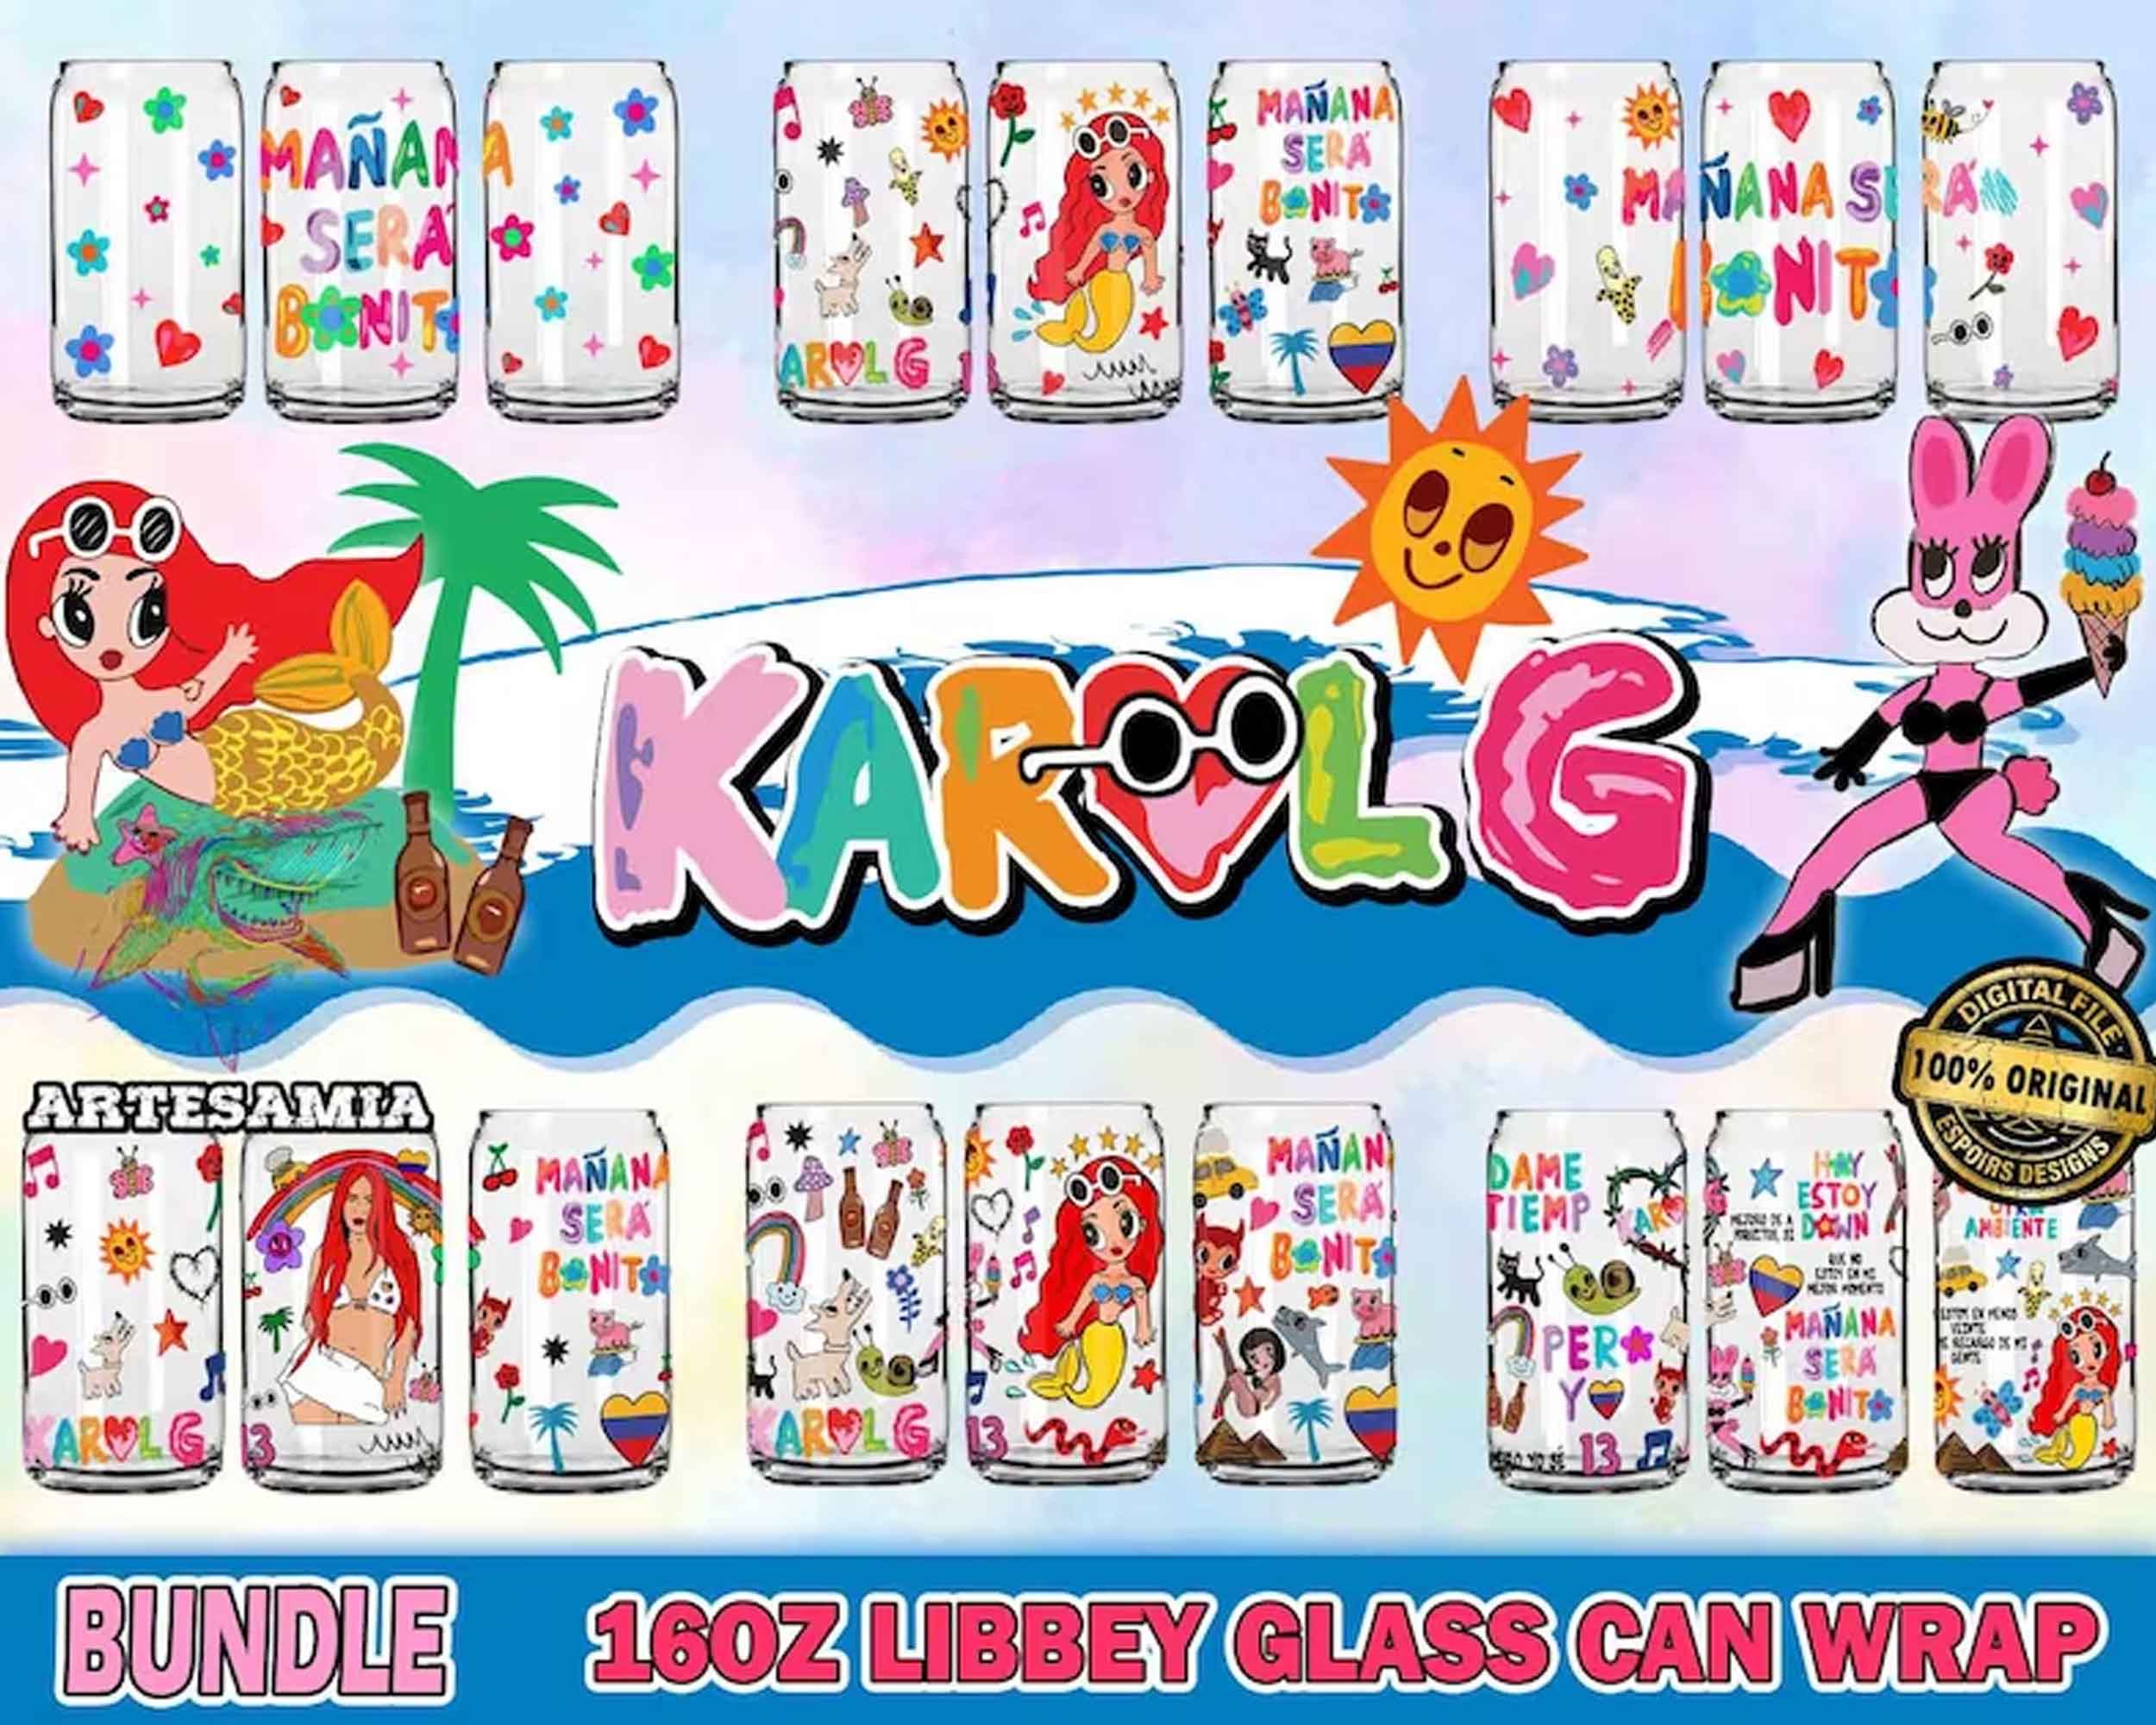 Karol G 16 Oz Glass Can Wrap PNG, Manana Sera Bonito, Karol G 16 Oz Glass Can, Karol G New Album, Sera Bonito Png, Digital Download